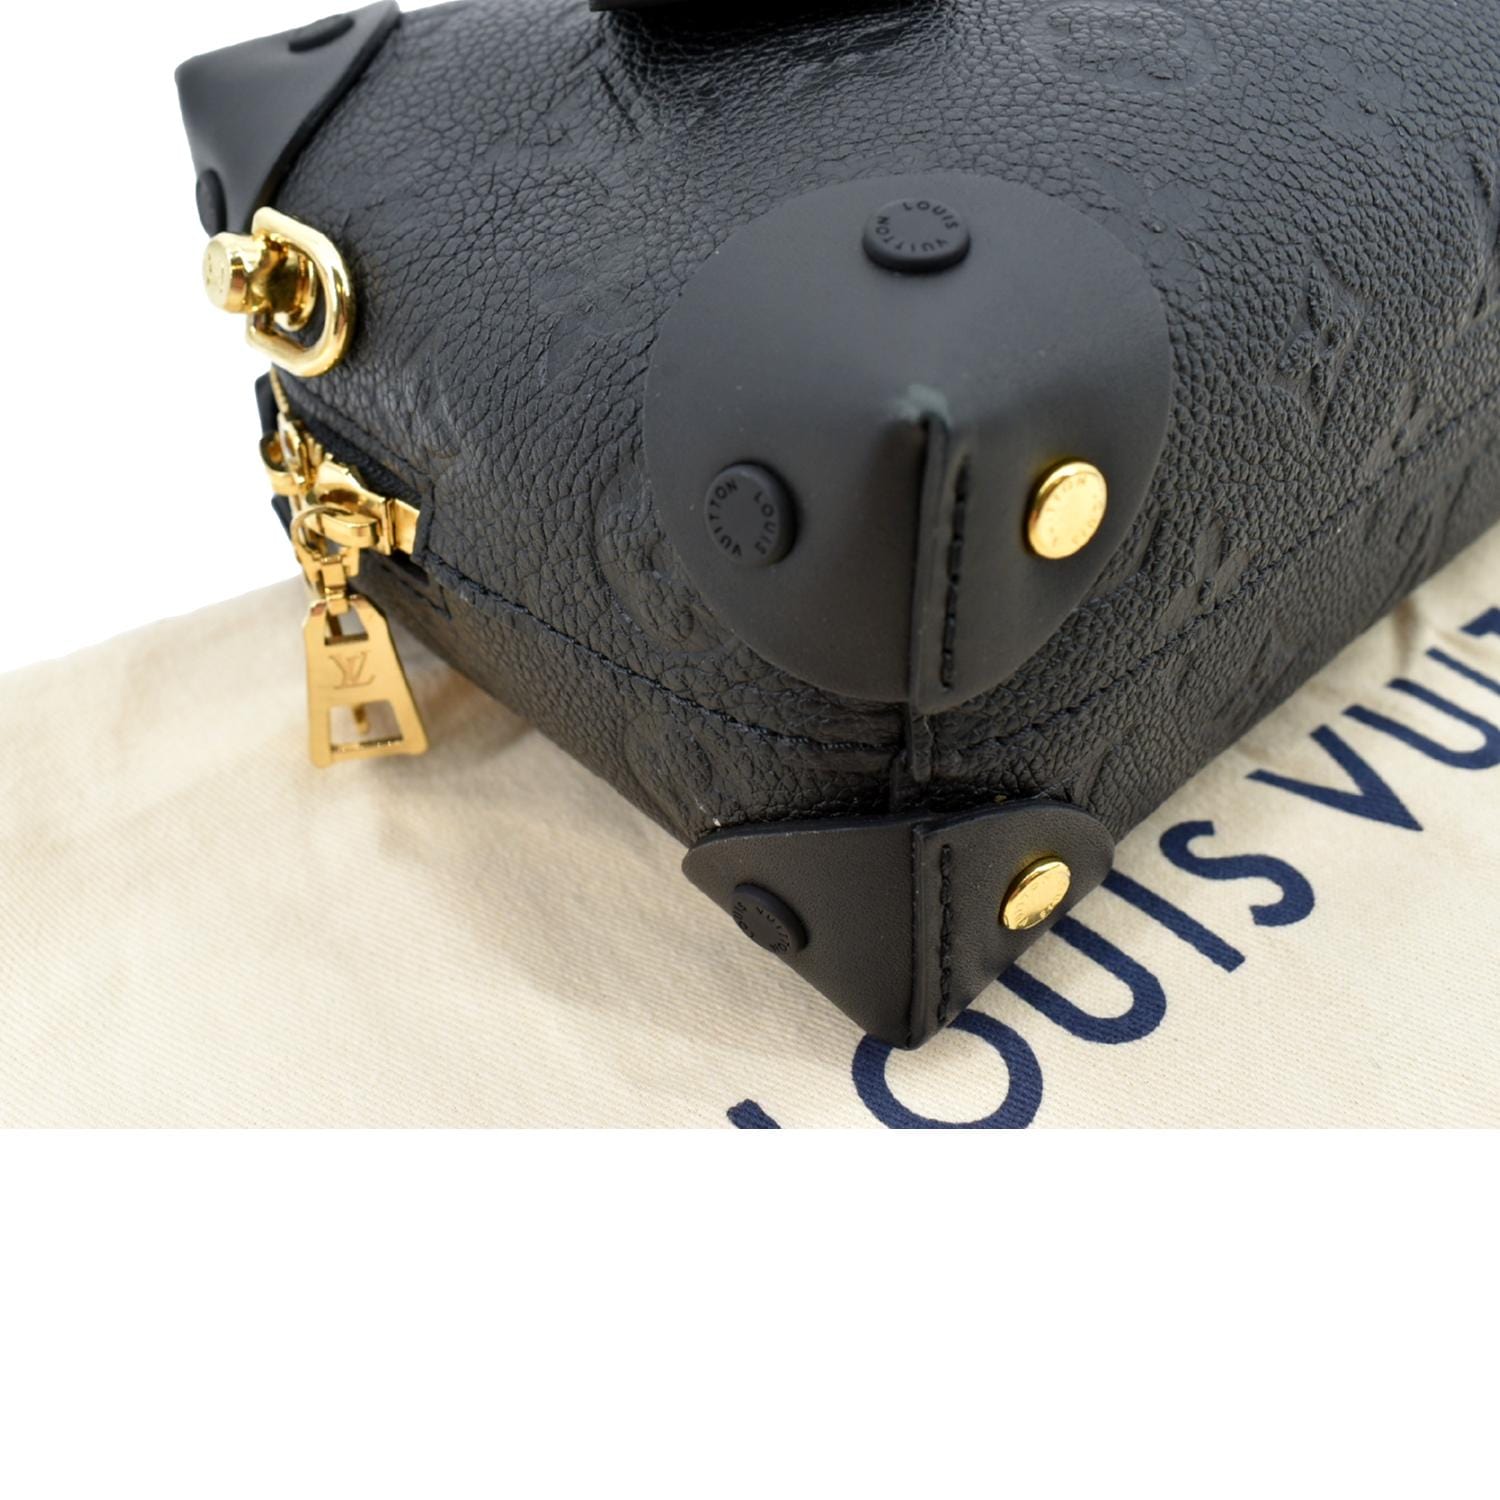 Louis Vuitton Trunk bag Petite Malle black/white monogram